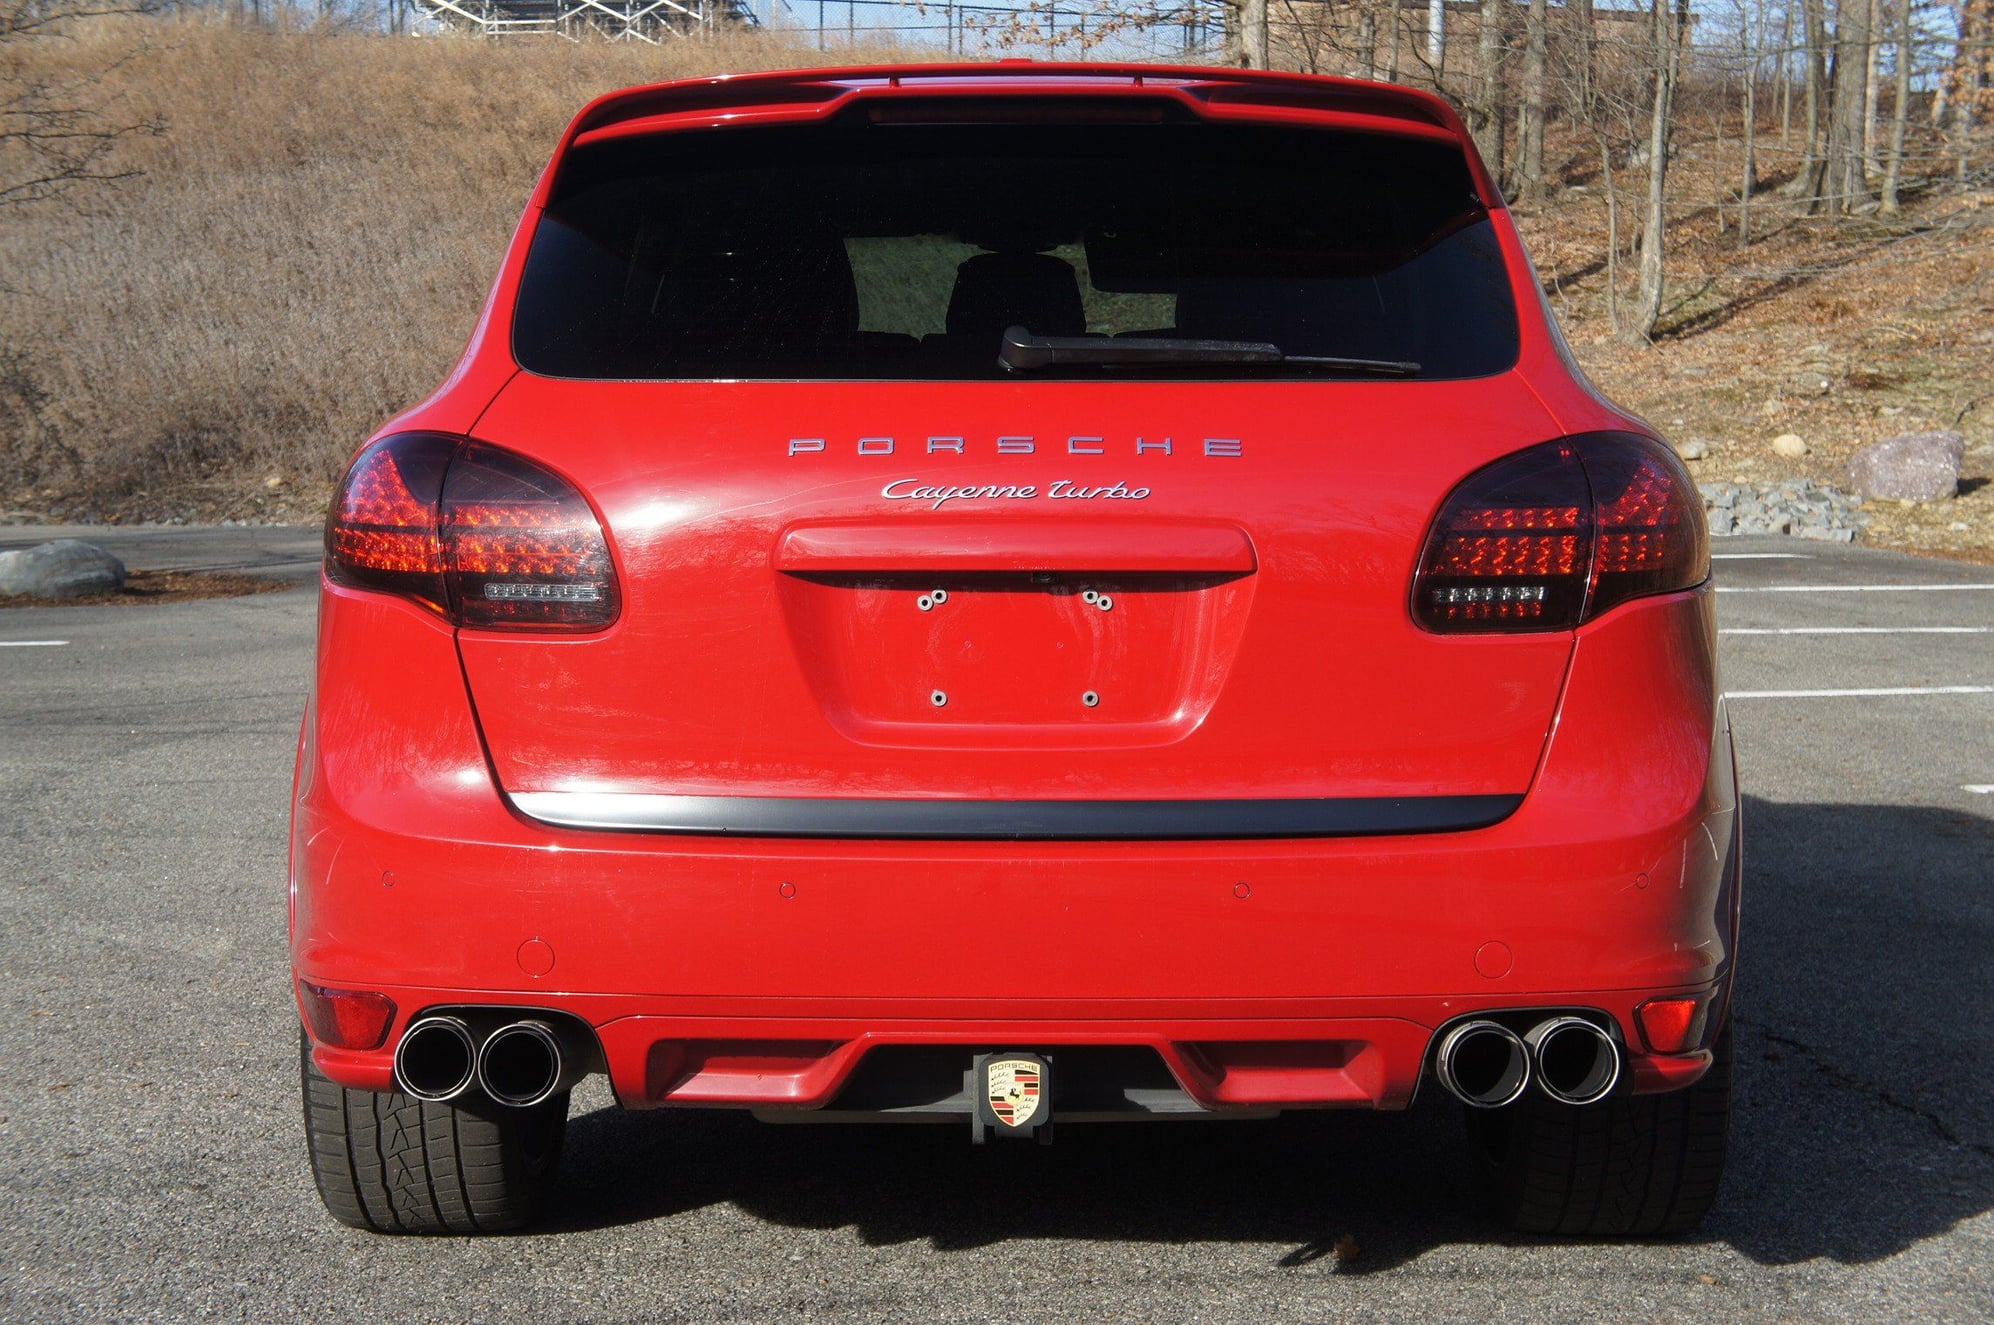 2014 Porsche Cayenne - 2014 PORSCHE CAYENNE TURBO SportDesign Package LOTS MORE $137k MSRP - Used - Parsippany, NJ 7054, United States